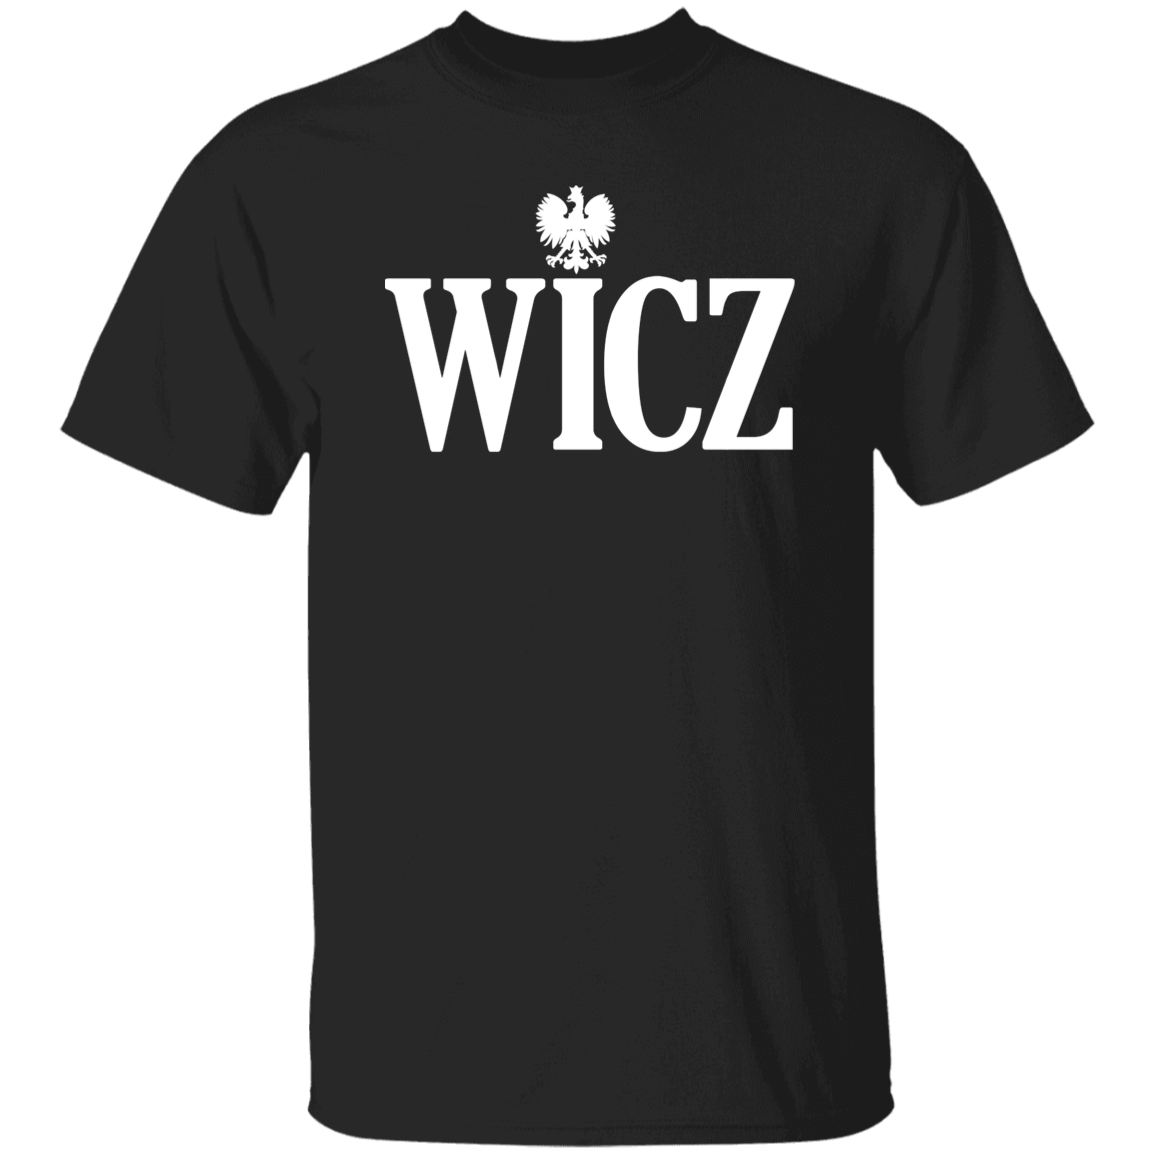 WICZ Polish Surname Ending Apparel CustomCat G500 5.3 oz. T-Shirt Black S